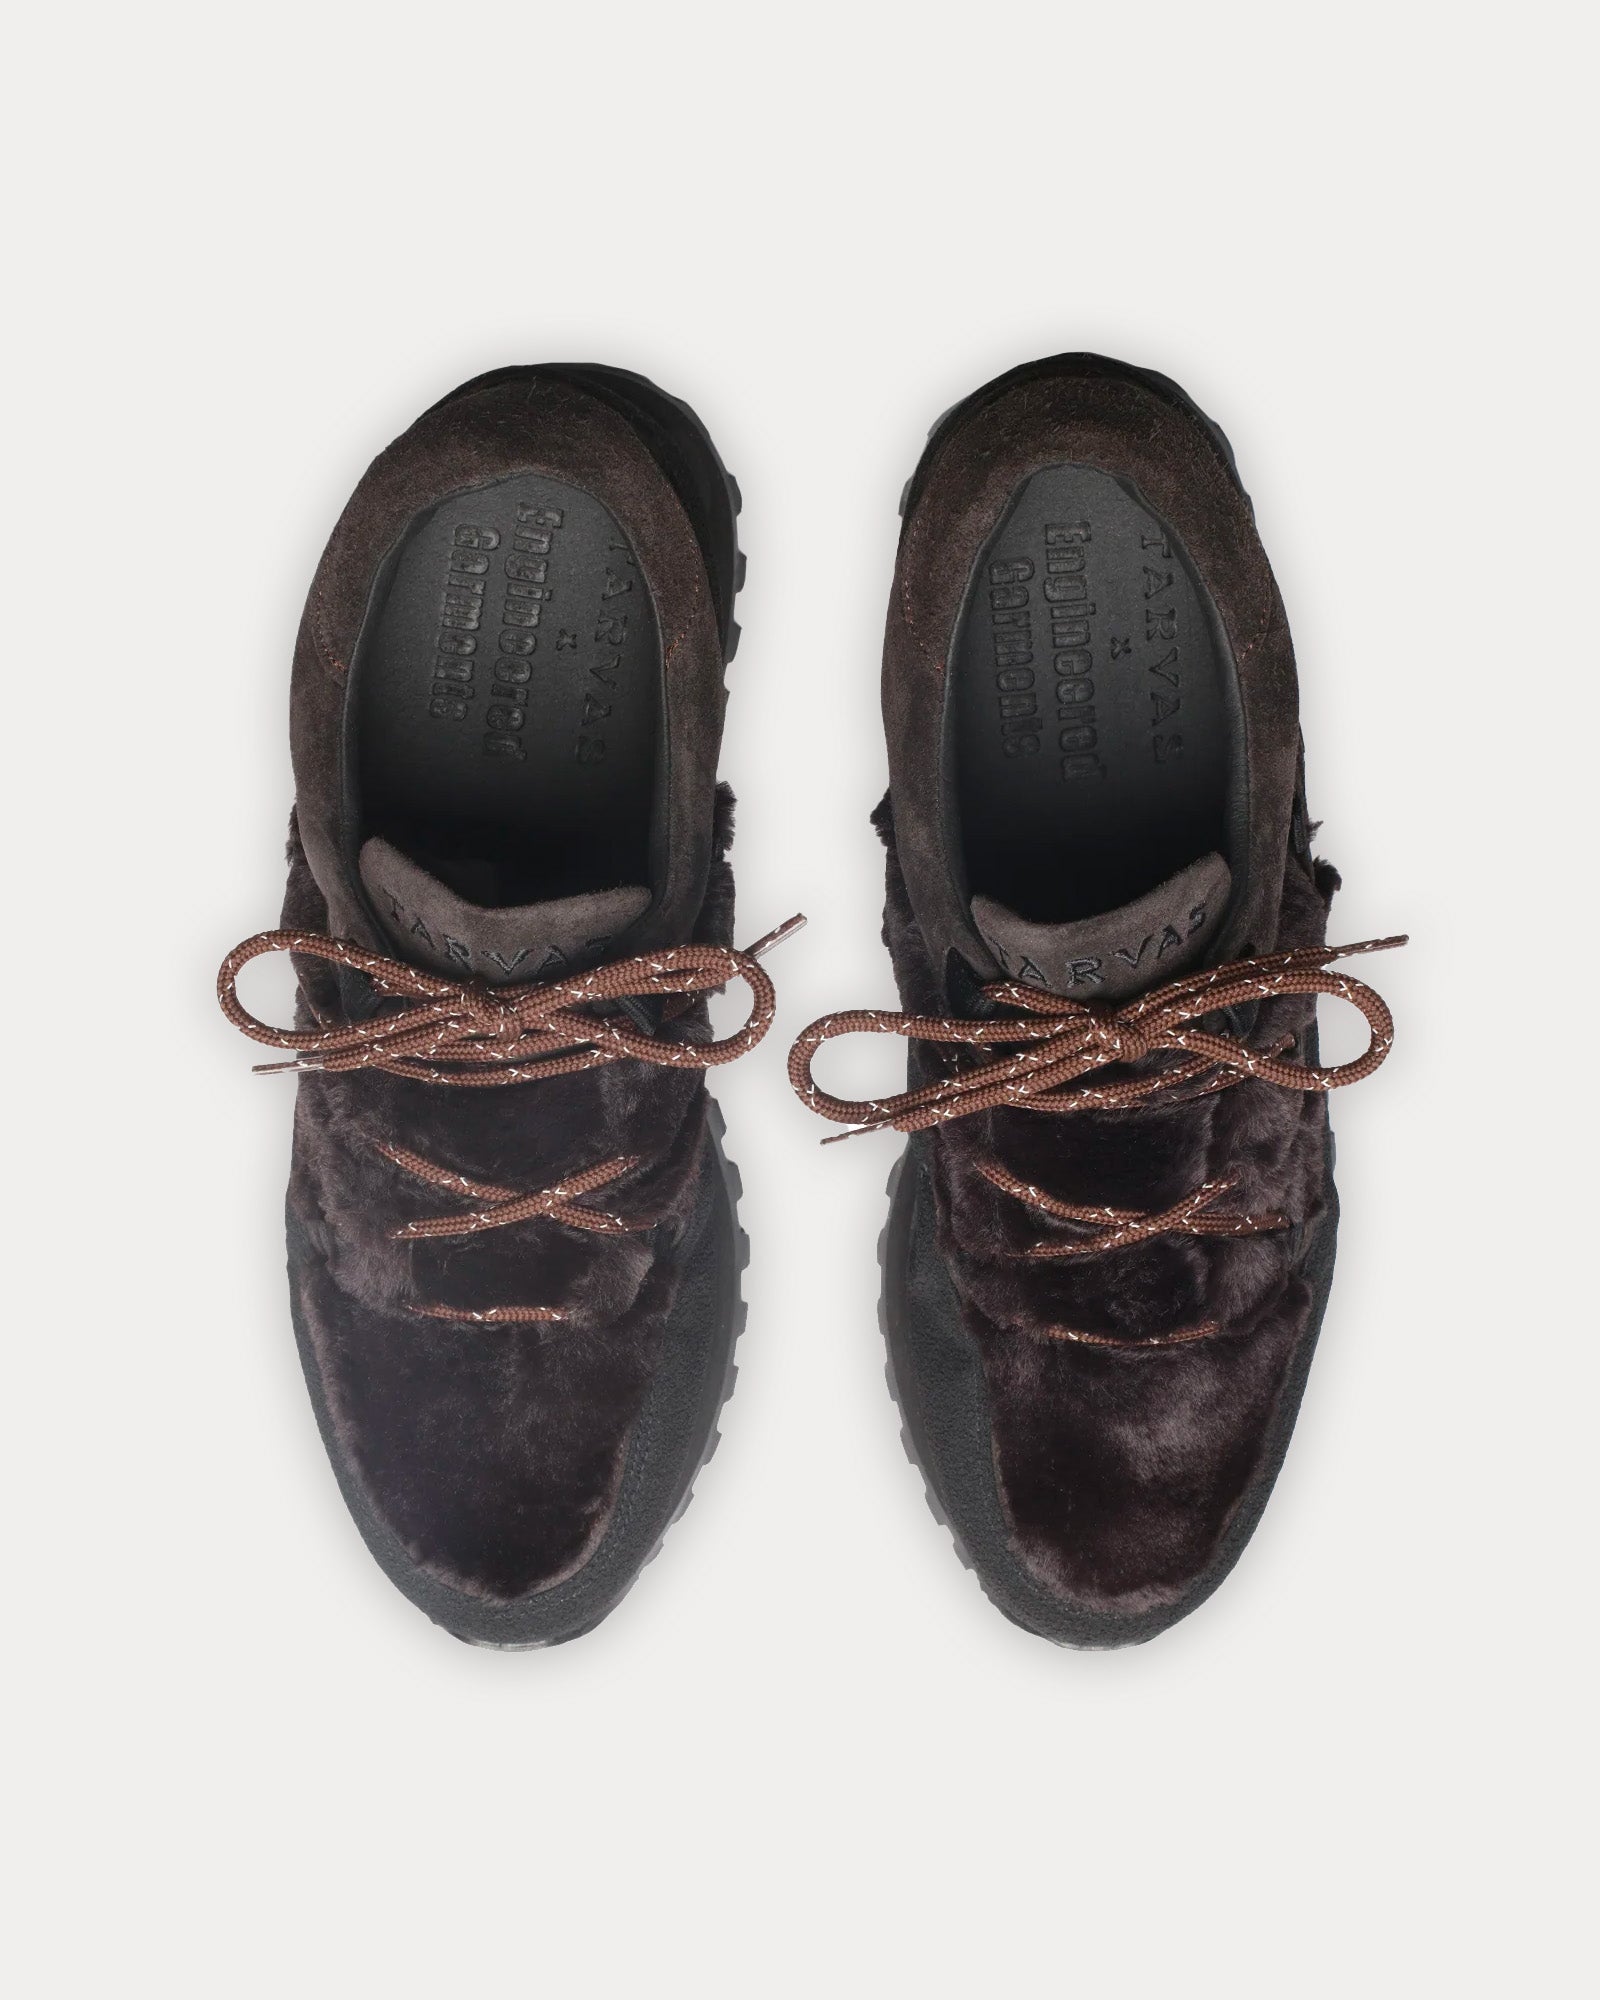 Tarvas x Engineered Garments - Forest Bather Brown Low Top Sneakers